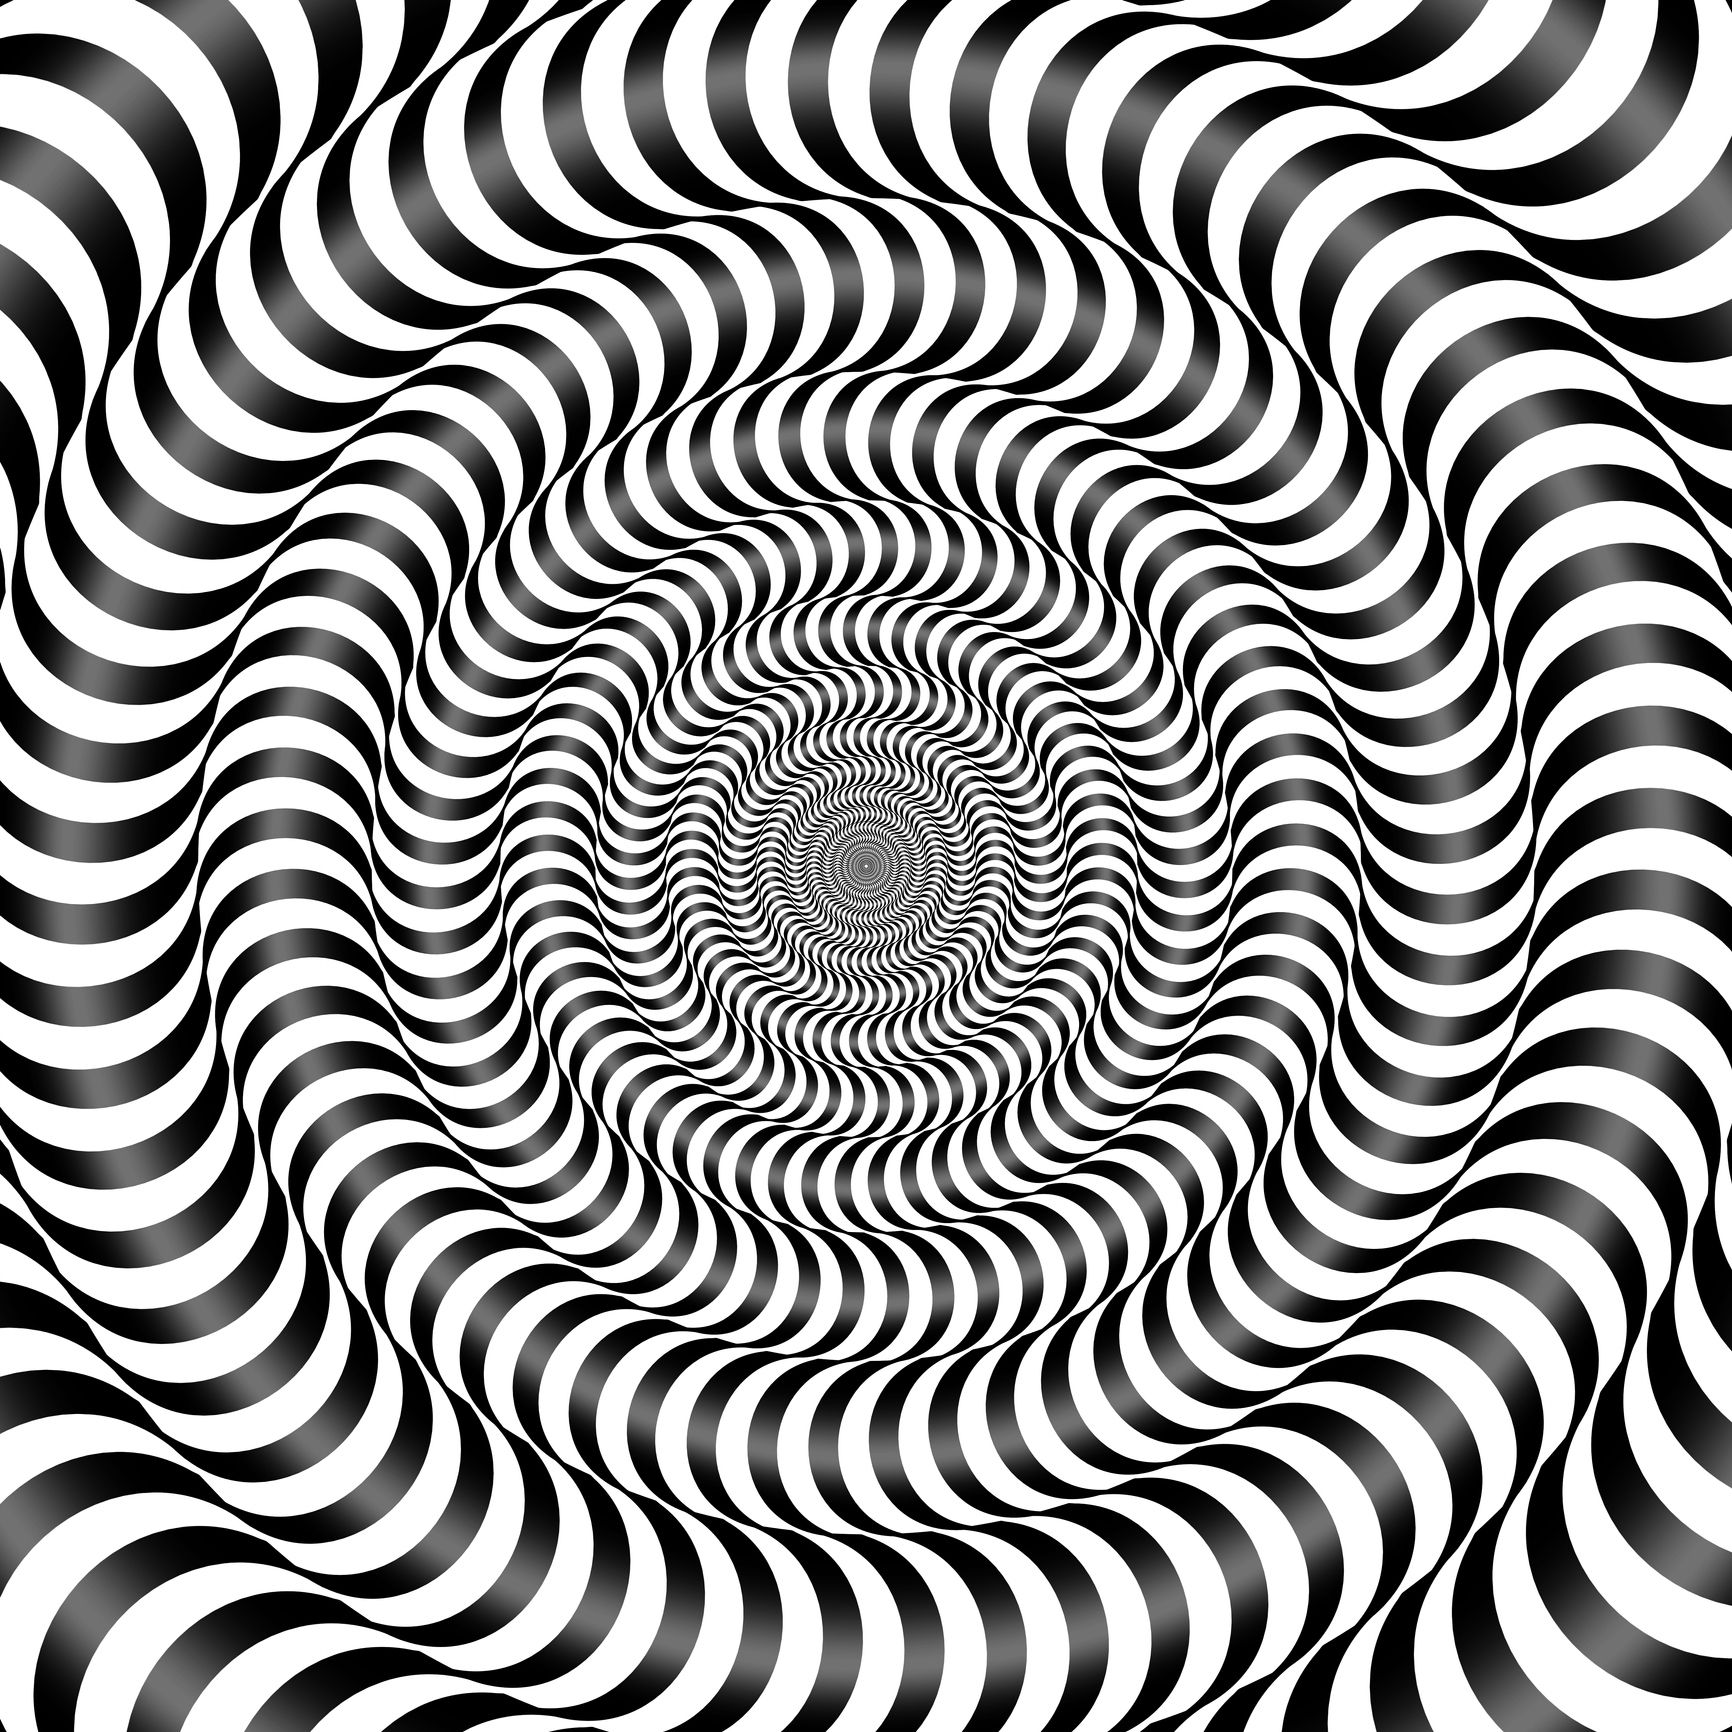 3d visual illusions